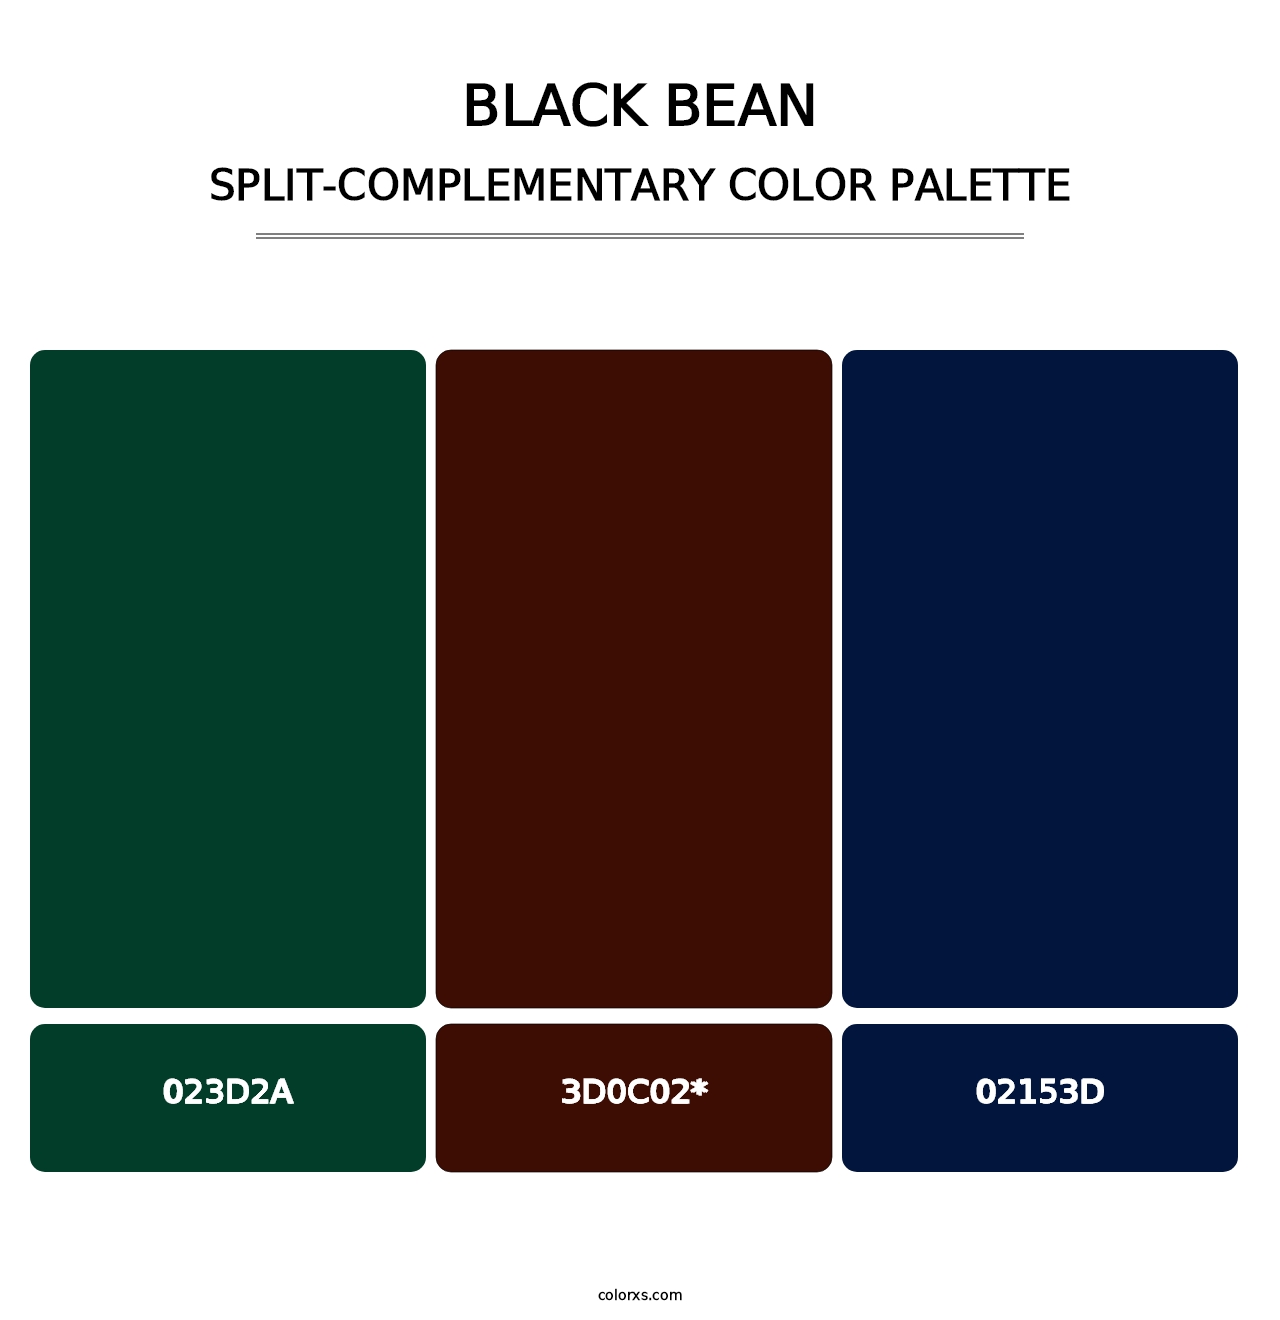 Black Bean - Split-Complementary Color Palette